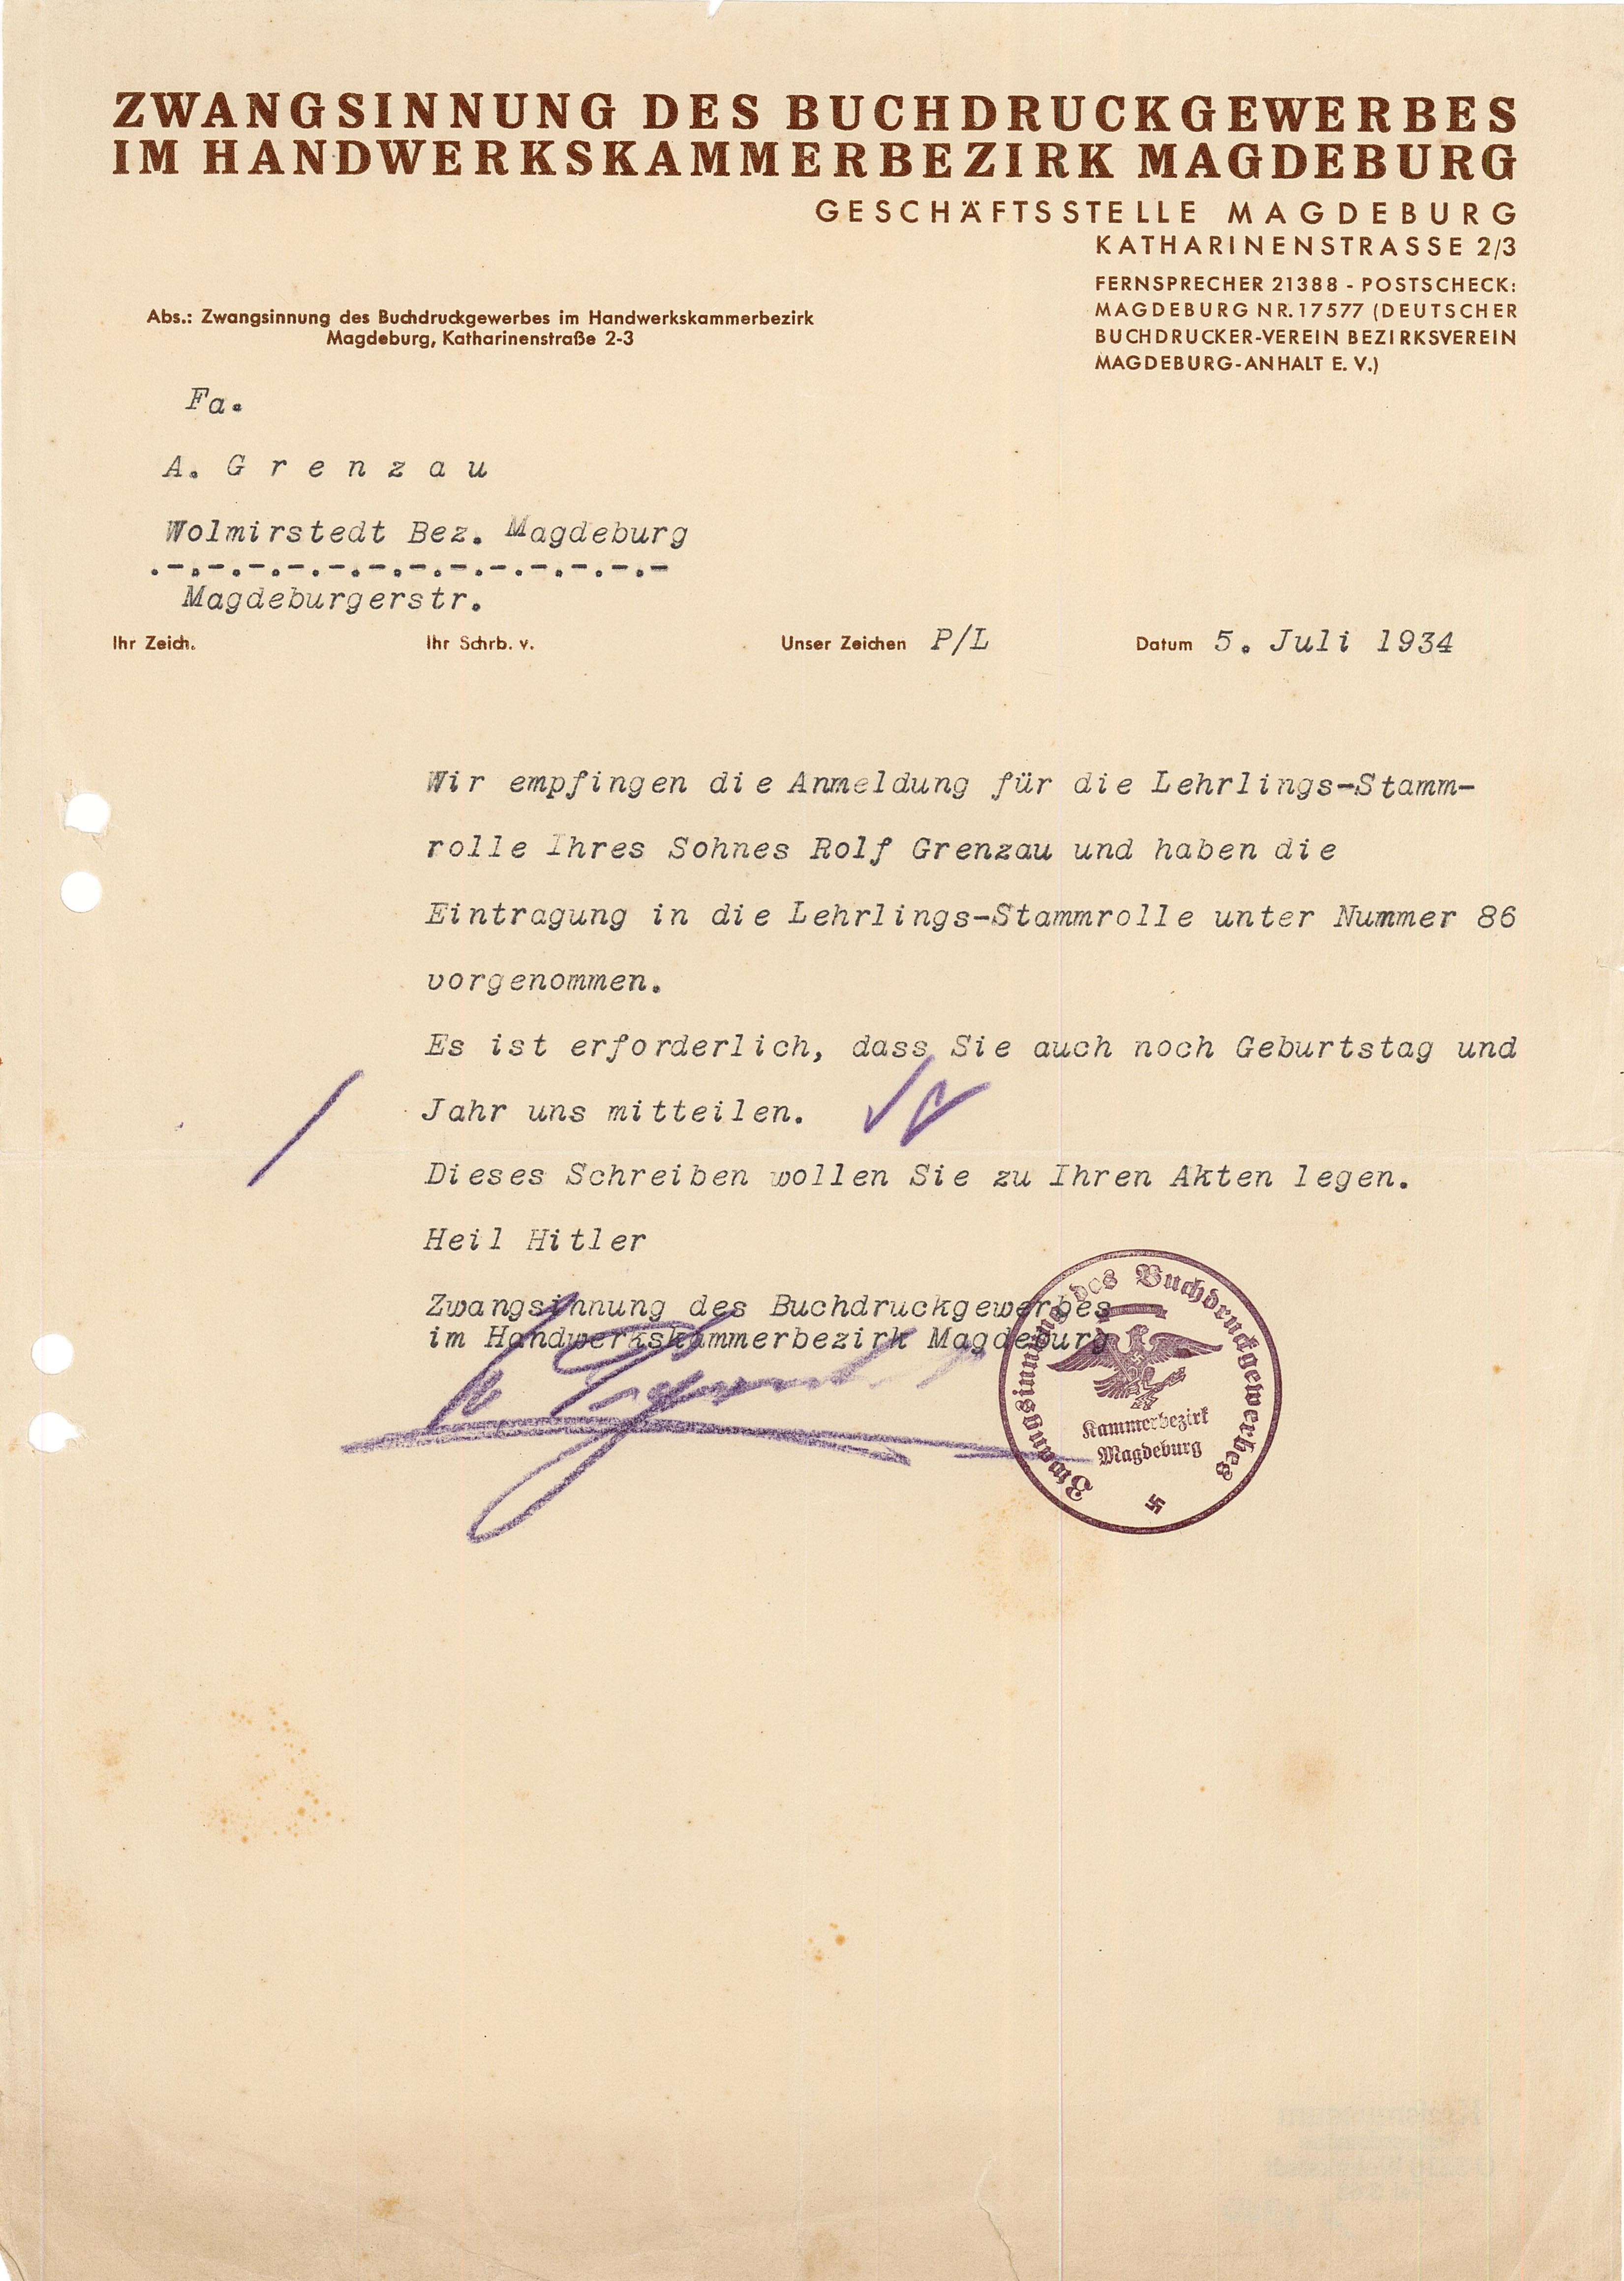 Anmeldnung f. d. Lehrlingsstammrolle Rolf Grenzau - 1934 (Museum Wolmirstedt RR-F)